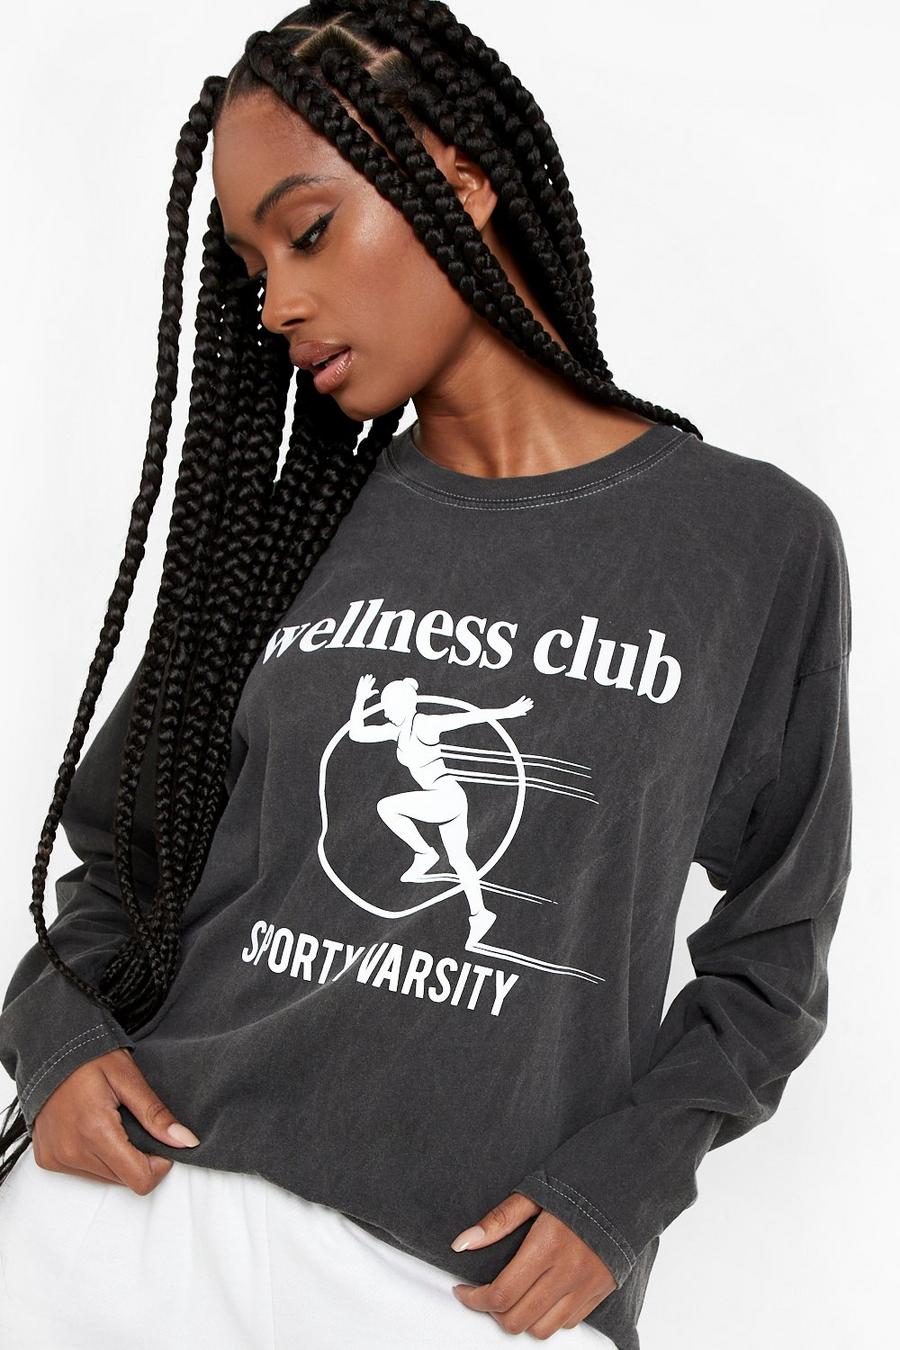 Camiseta oversize de manga larga con estampado de Wellness Club, Black image number 1